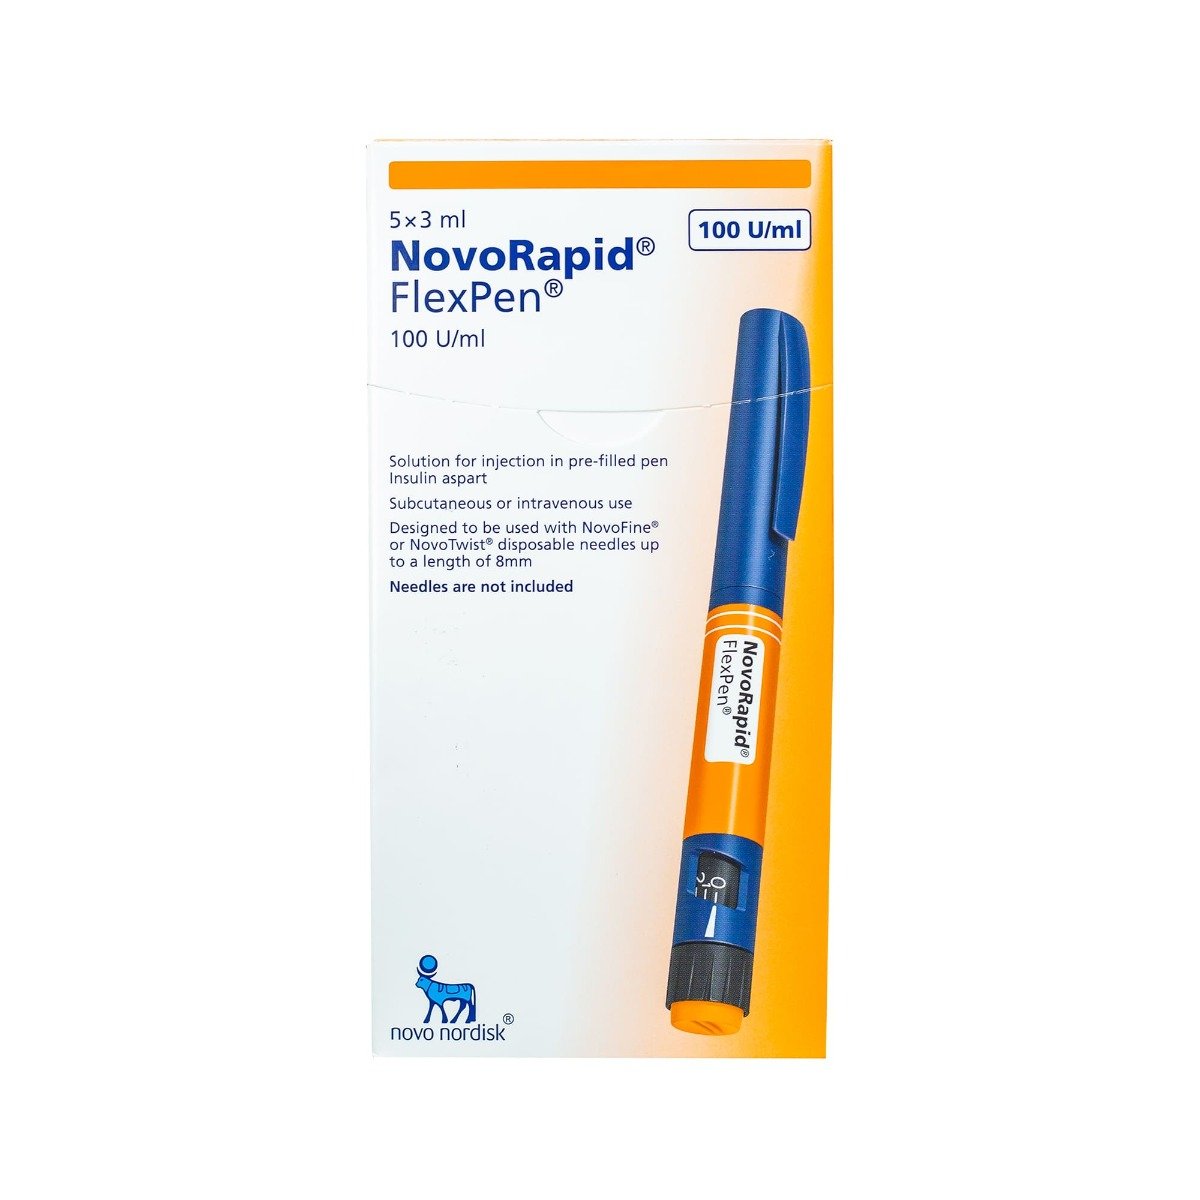 Novorapid Flexpen 100 IU-ml 3 ml - 5 Pens - Bloom Pharmacy